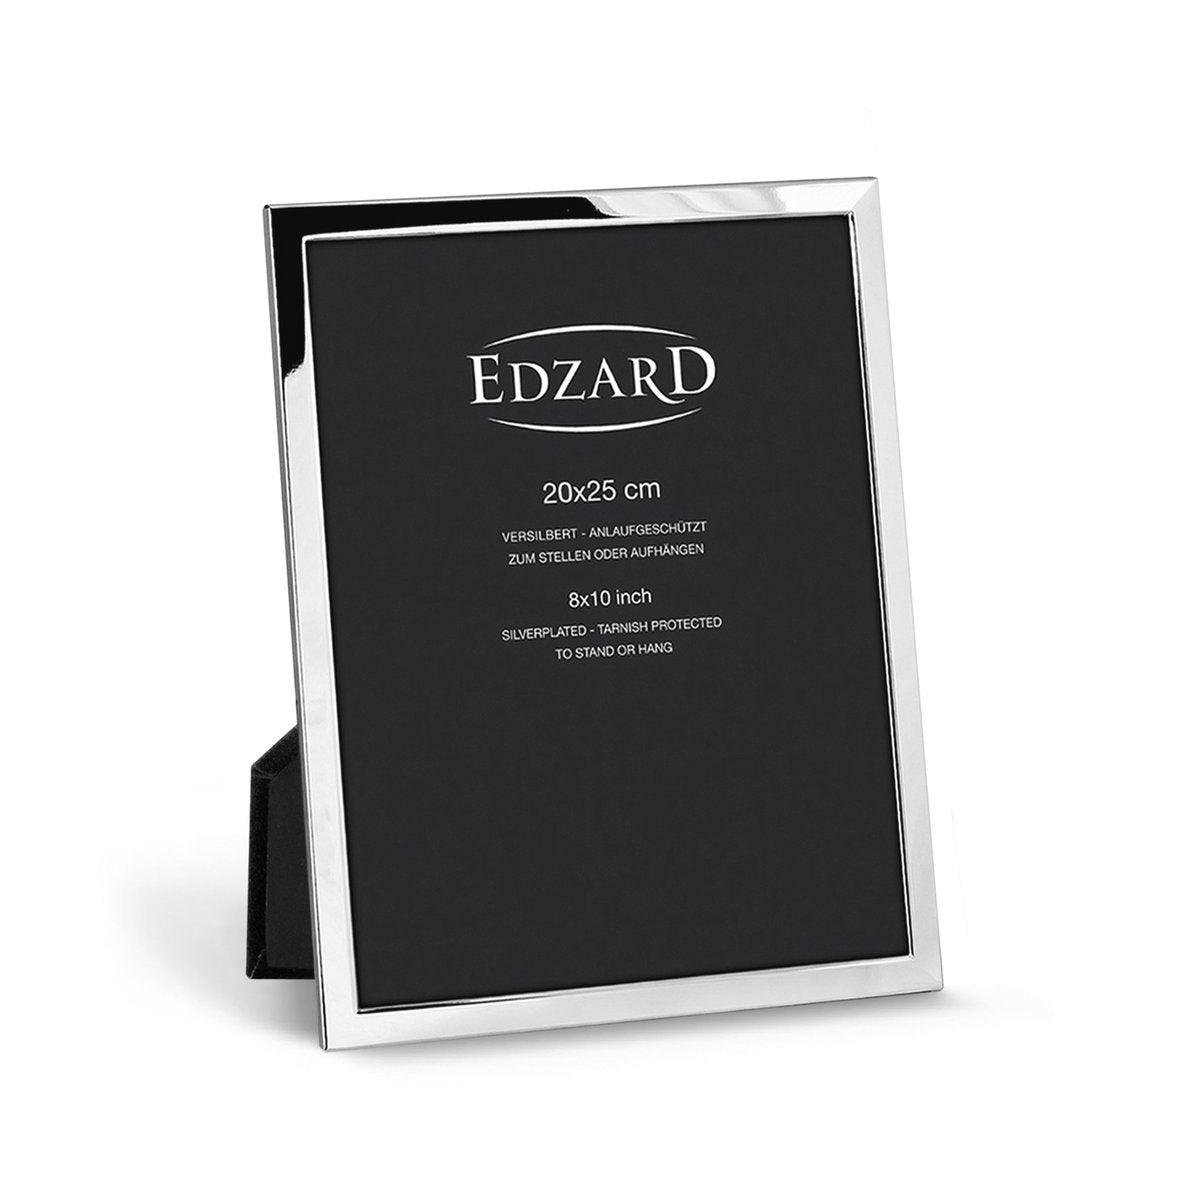 EDZARD Fotorahmen Bergamo, für Foto 20 x 25 cm, edel versilbert, anlaufgeschützt - HomeDesign Knaus